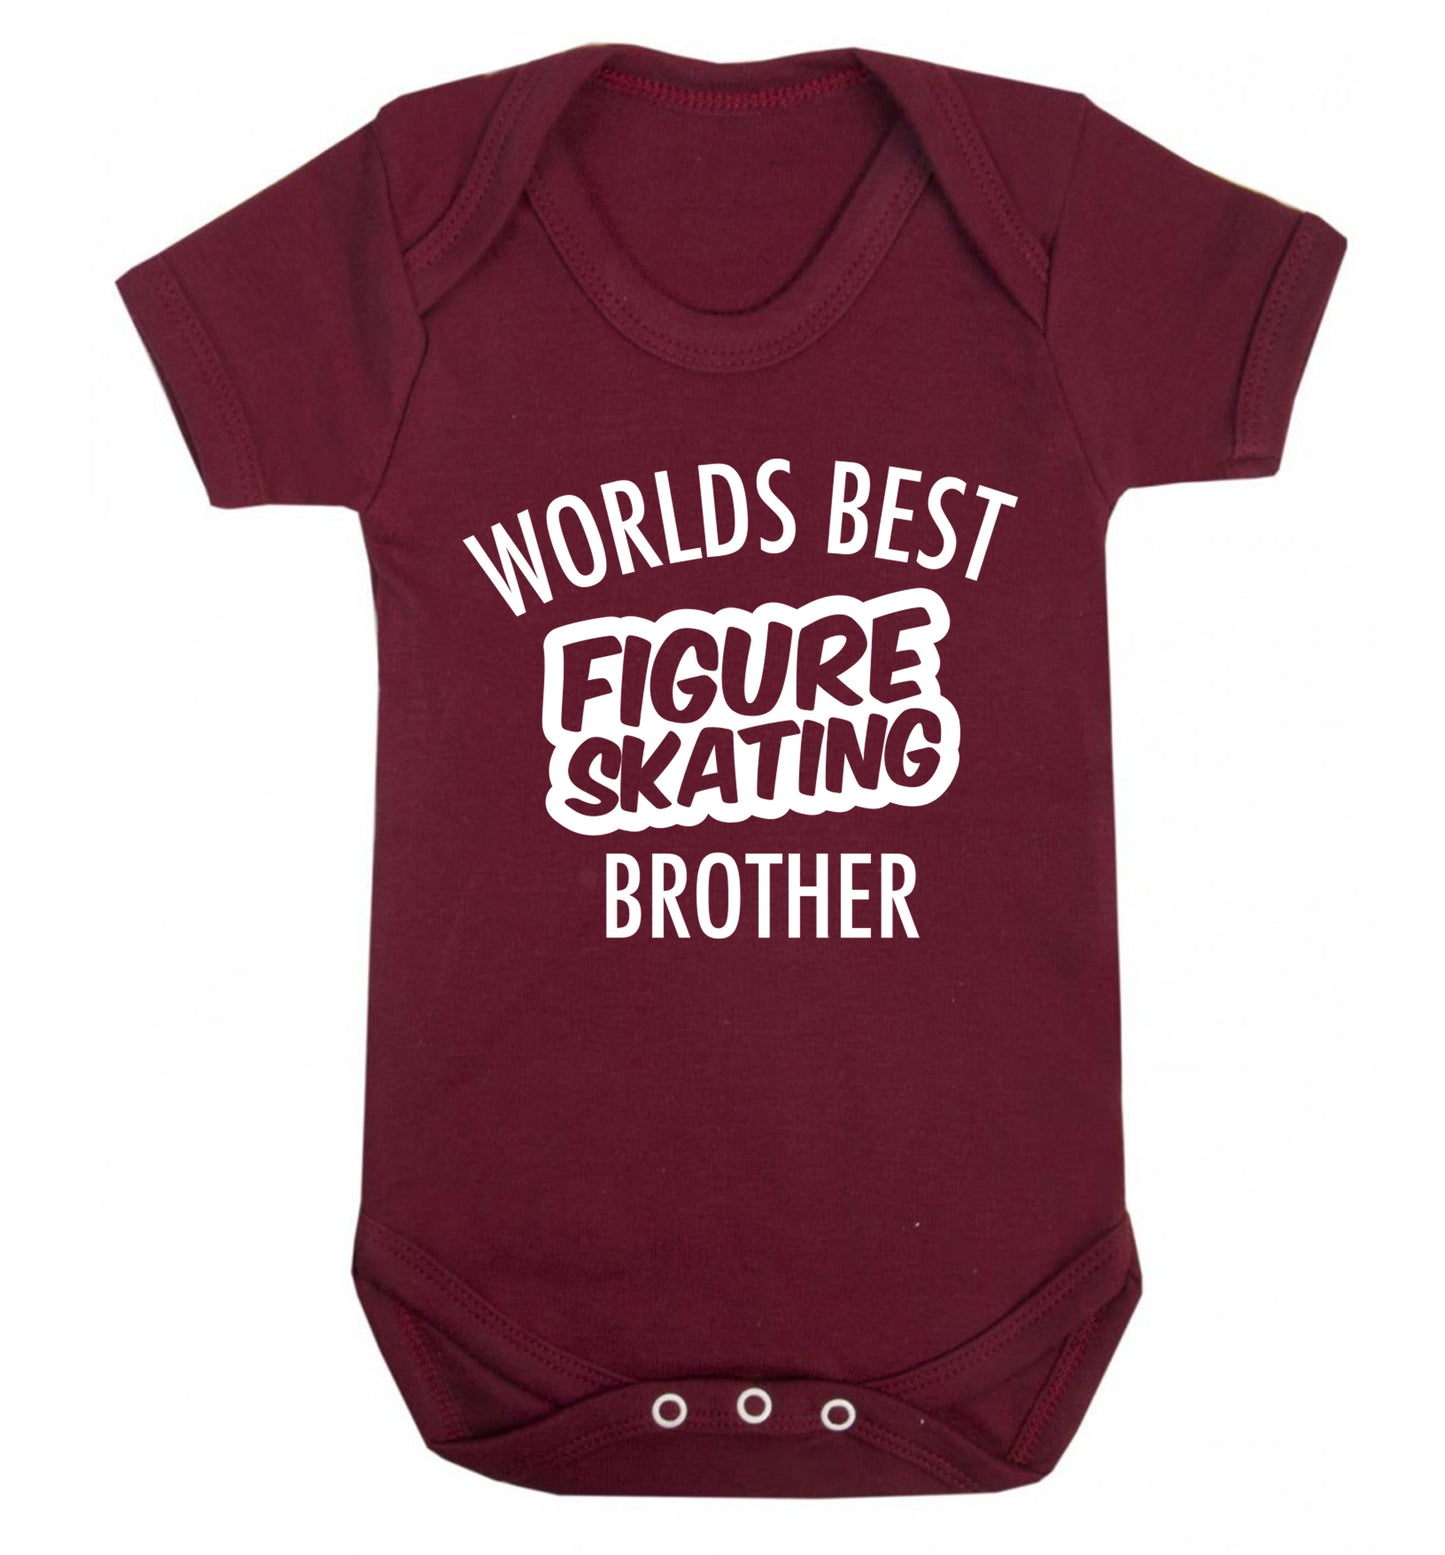 Worlds best figure skating brother Baby Vest maroon 18-24 months